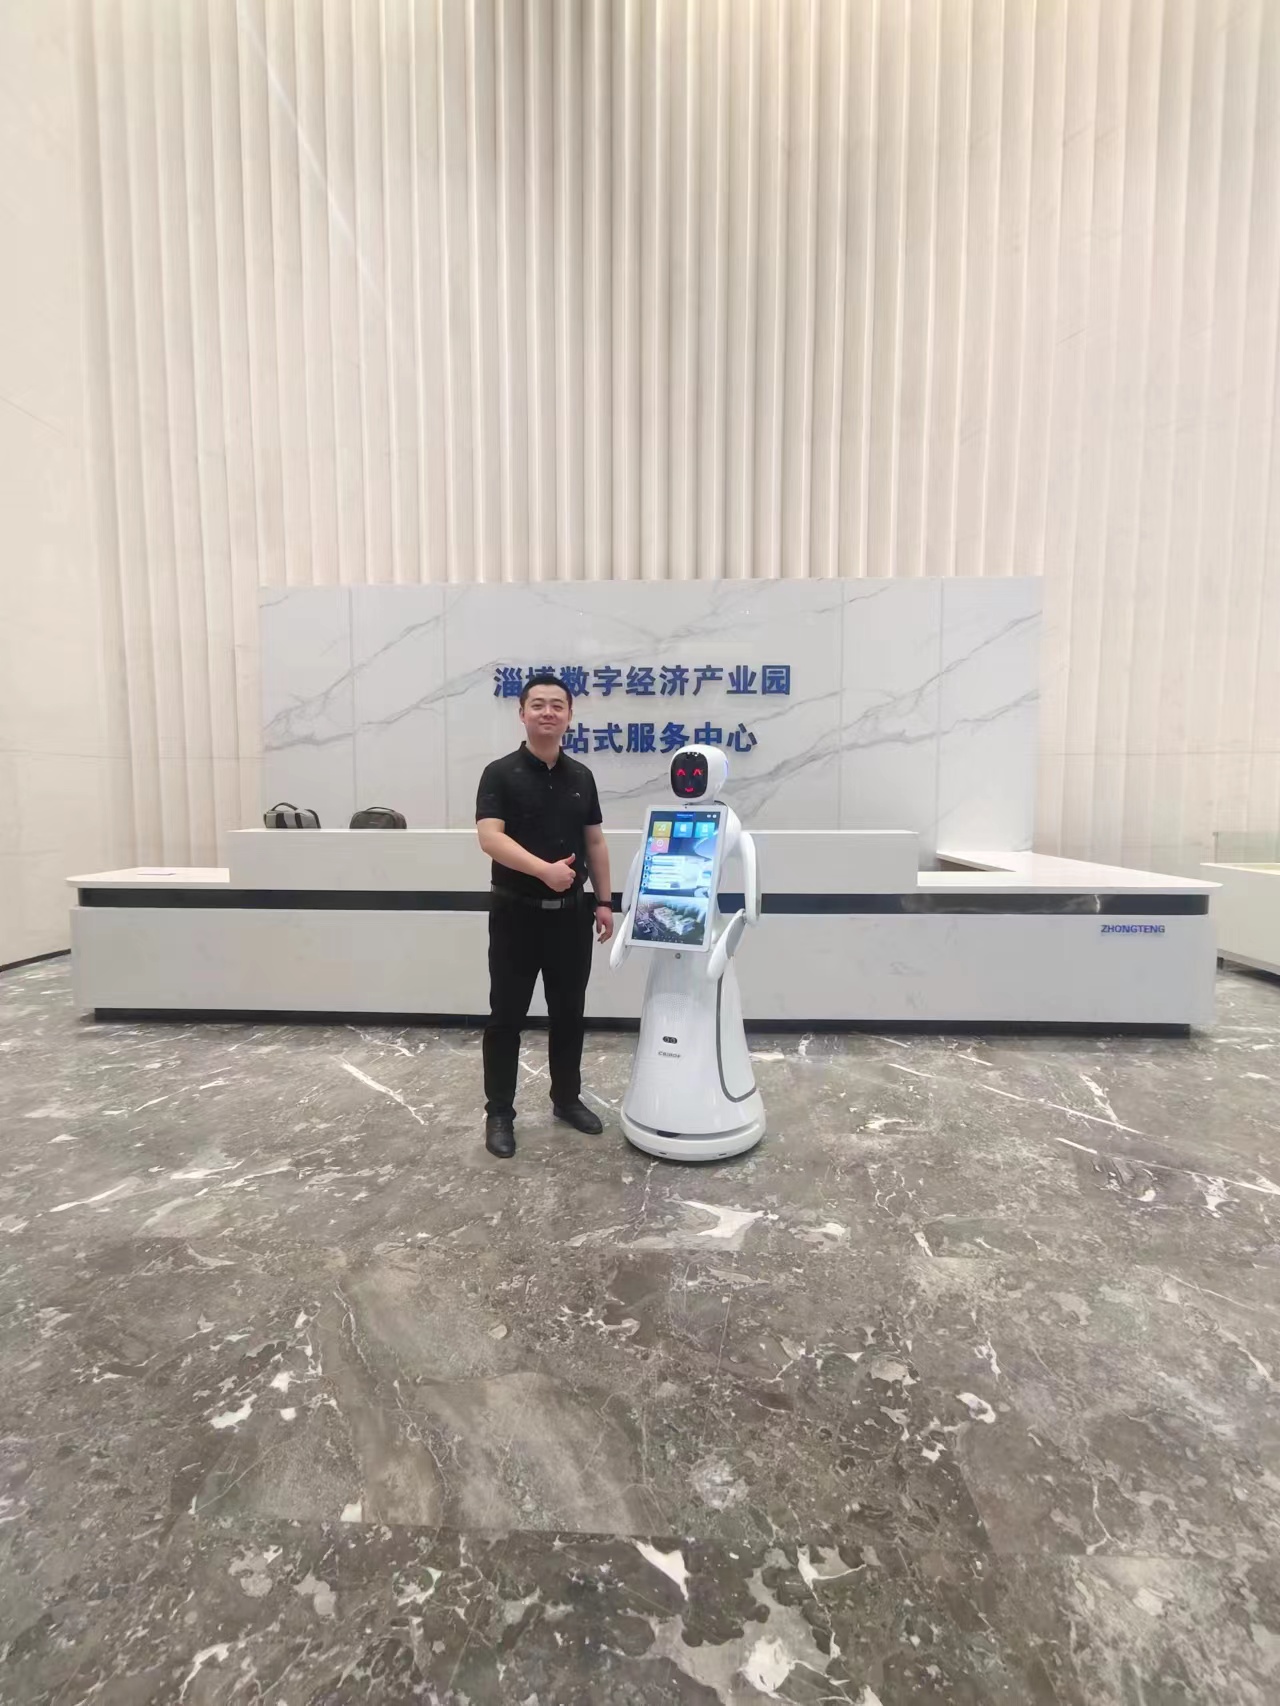 Parque Industrial de Economia Digital de Zibo: Robô de Serviço Amy AI Liderando Nova Experiência de Visita Inteligente